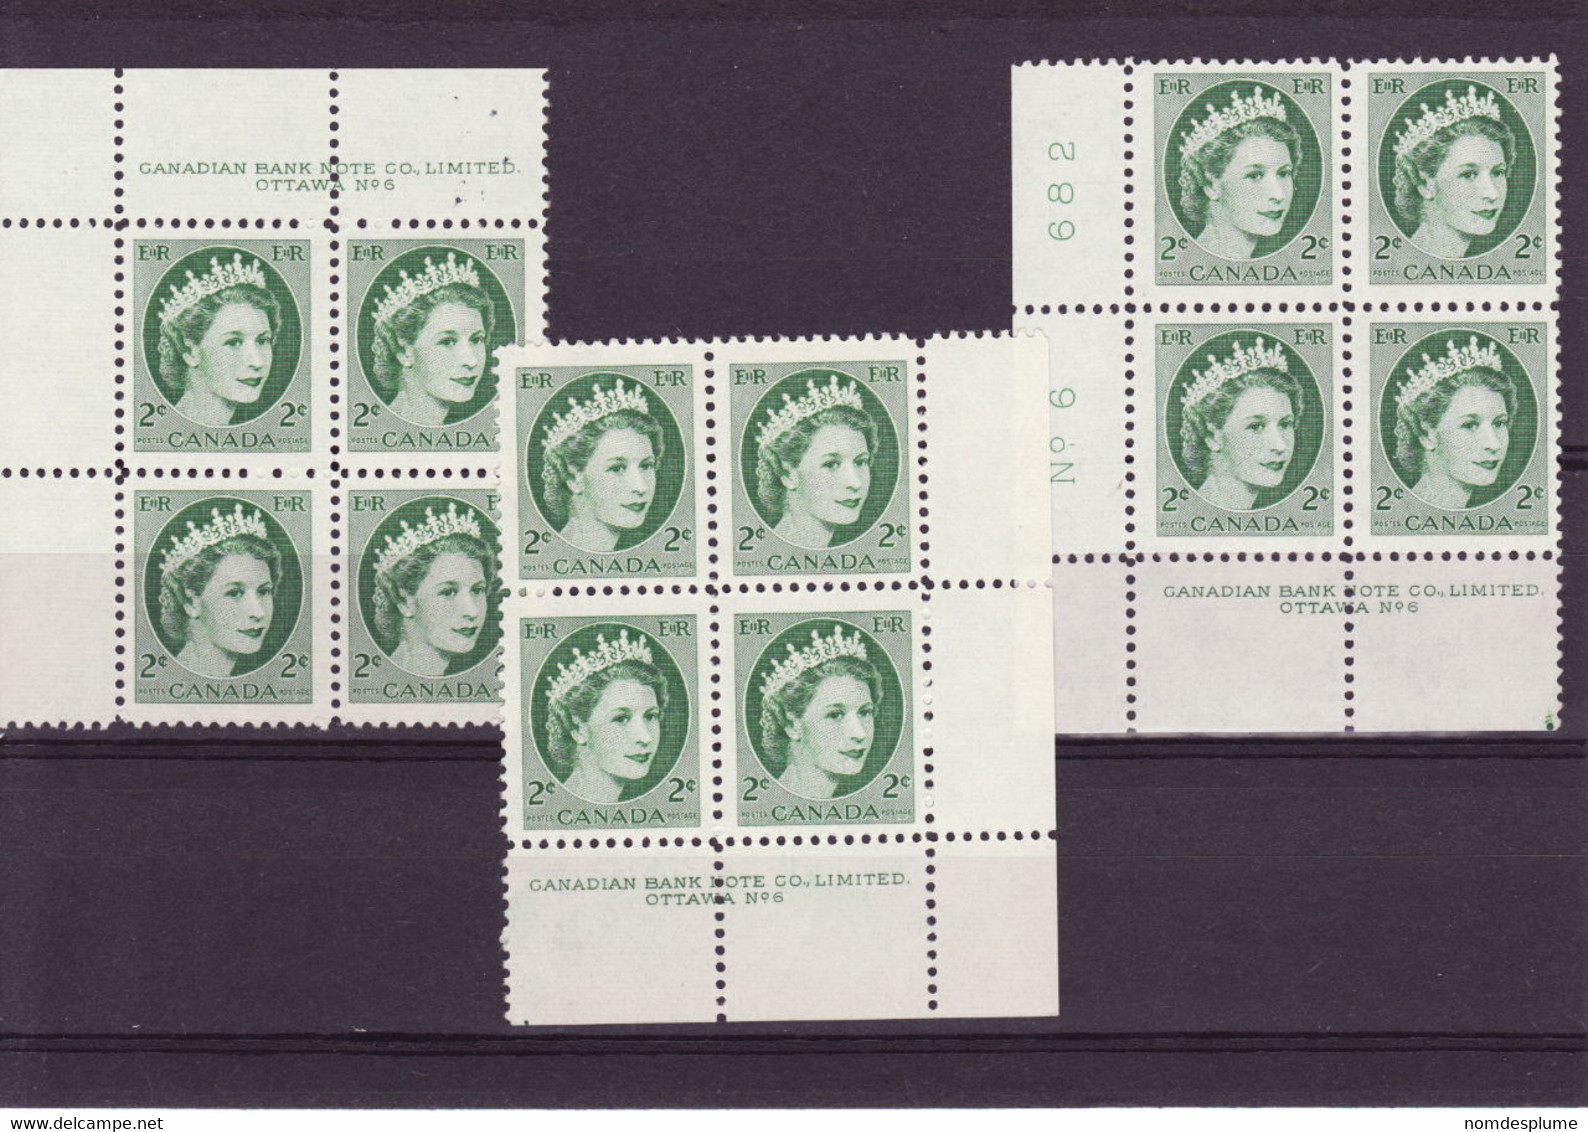 7849) Canada QE II Wilding Block Mint No Hinge Plate 6 - Plate Number & Inscriptions